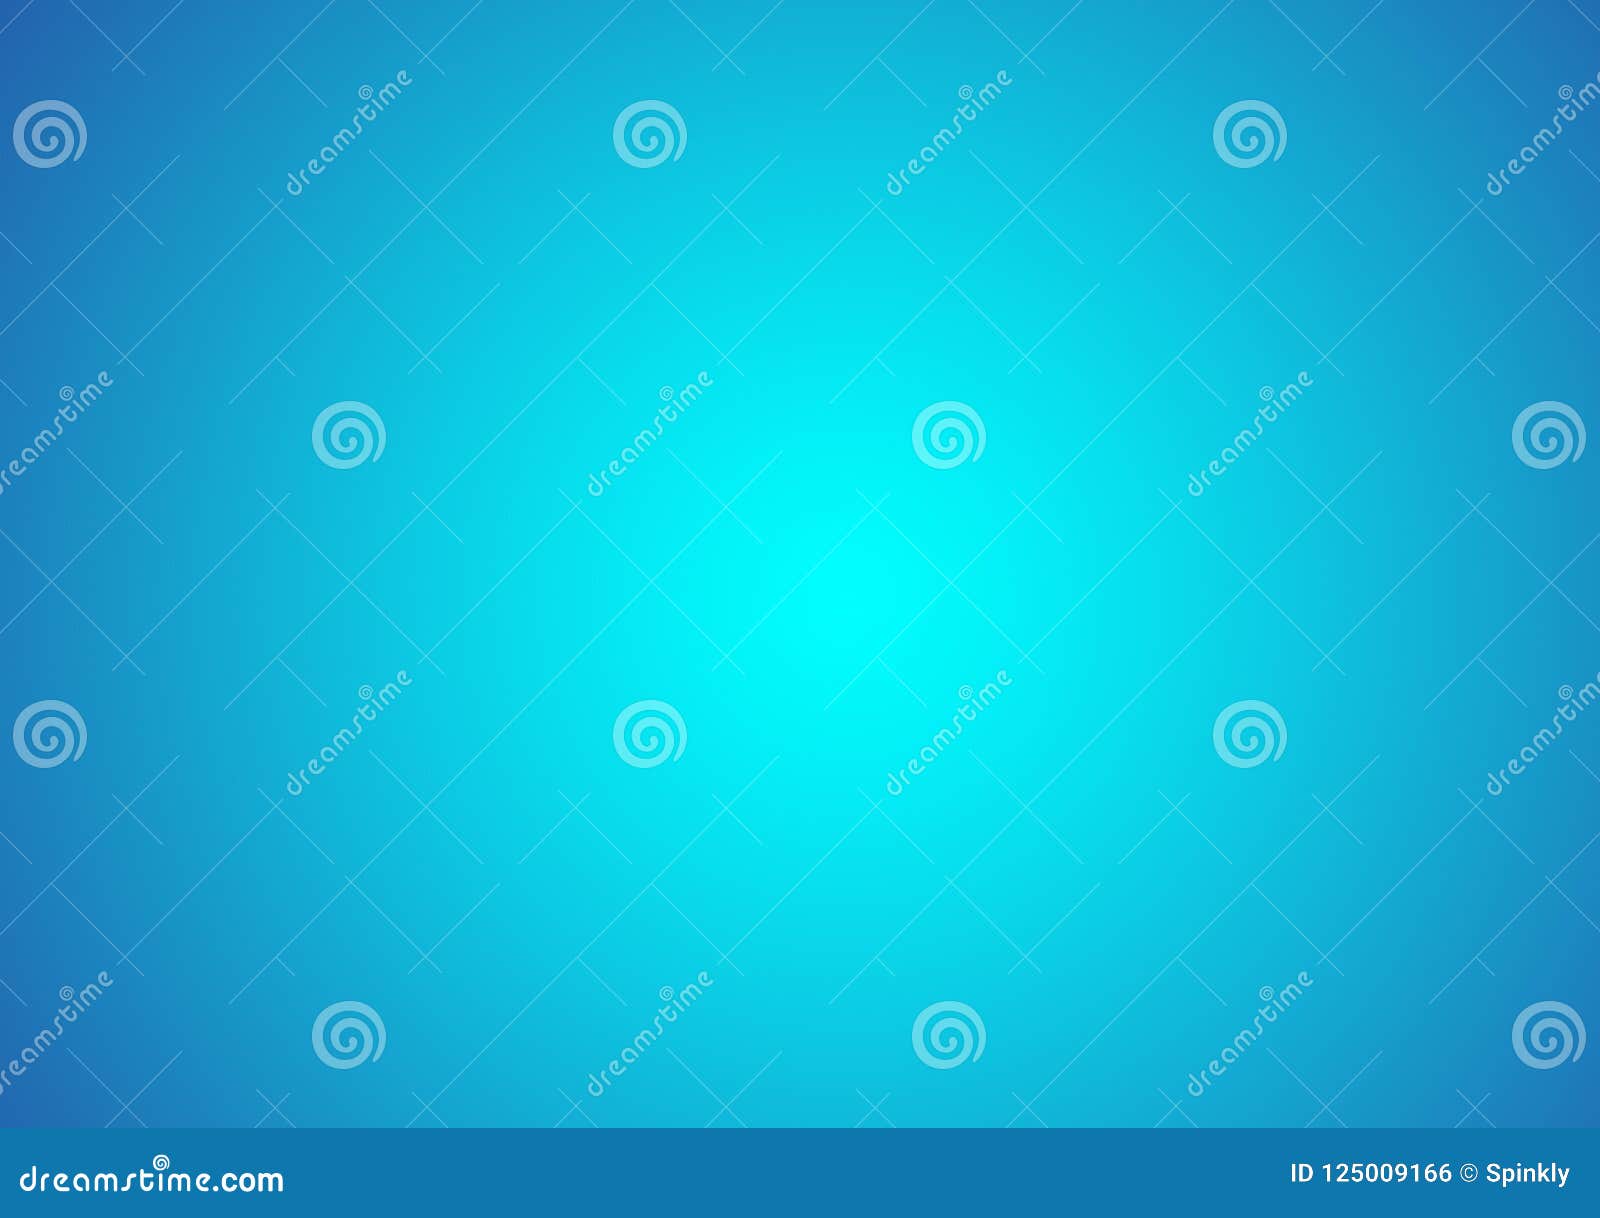 plain blue background with gradient